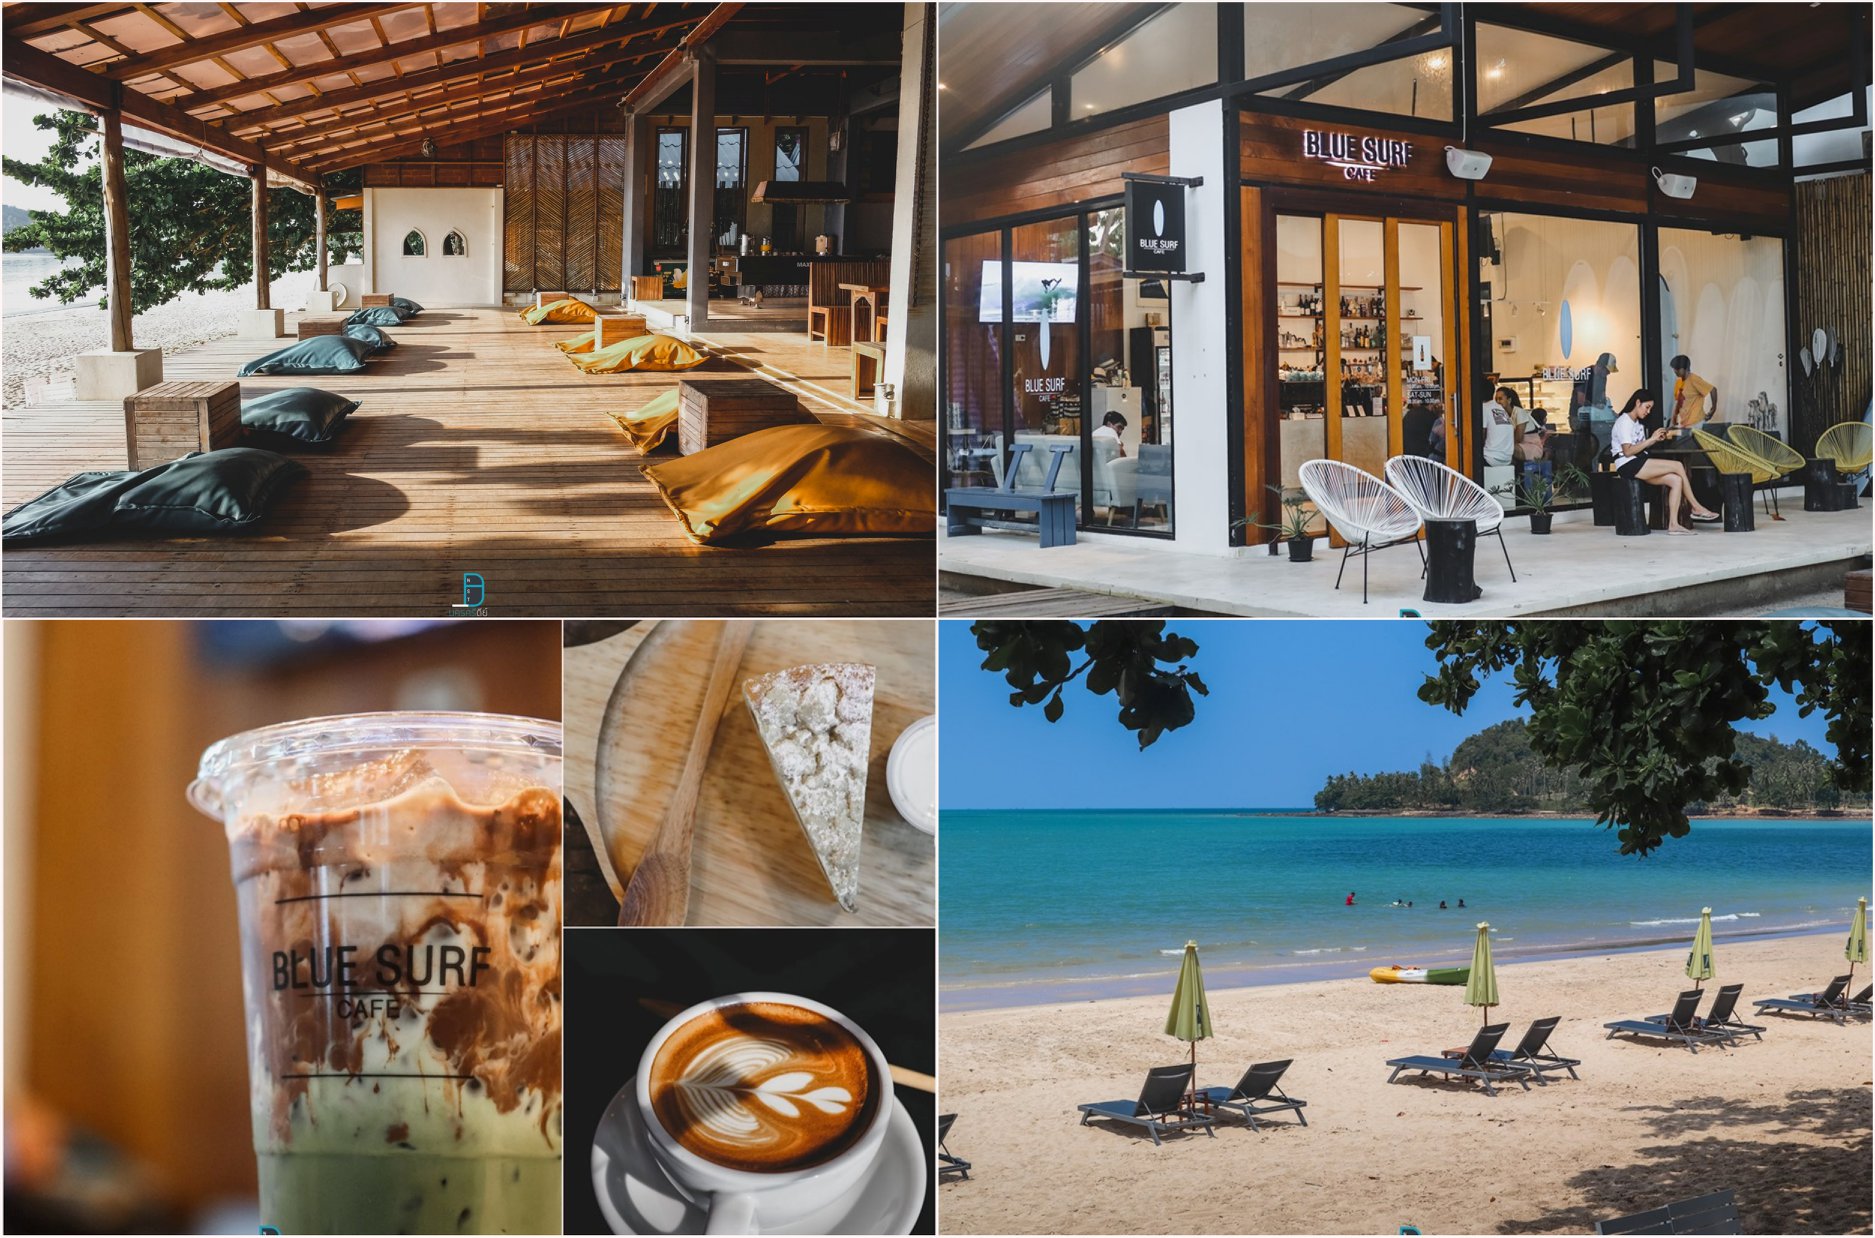  5.-Blue-Surf-Cafe
คลิกที่นี่

 นครศรีดีย์,ของกิน,ที่เที่ยว,จุดเช็คอิน,นครศรีธรรมราช